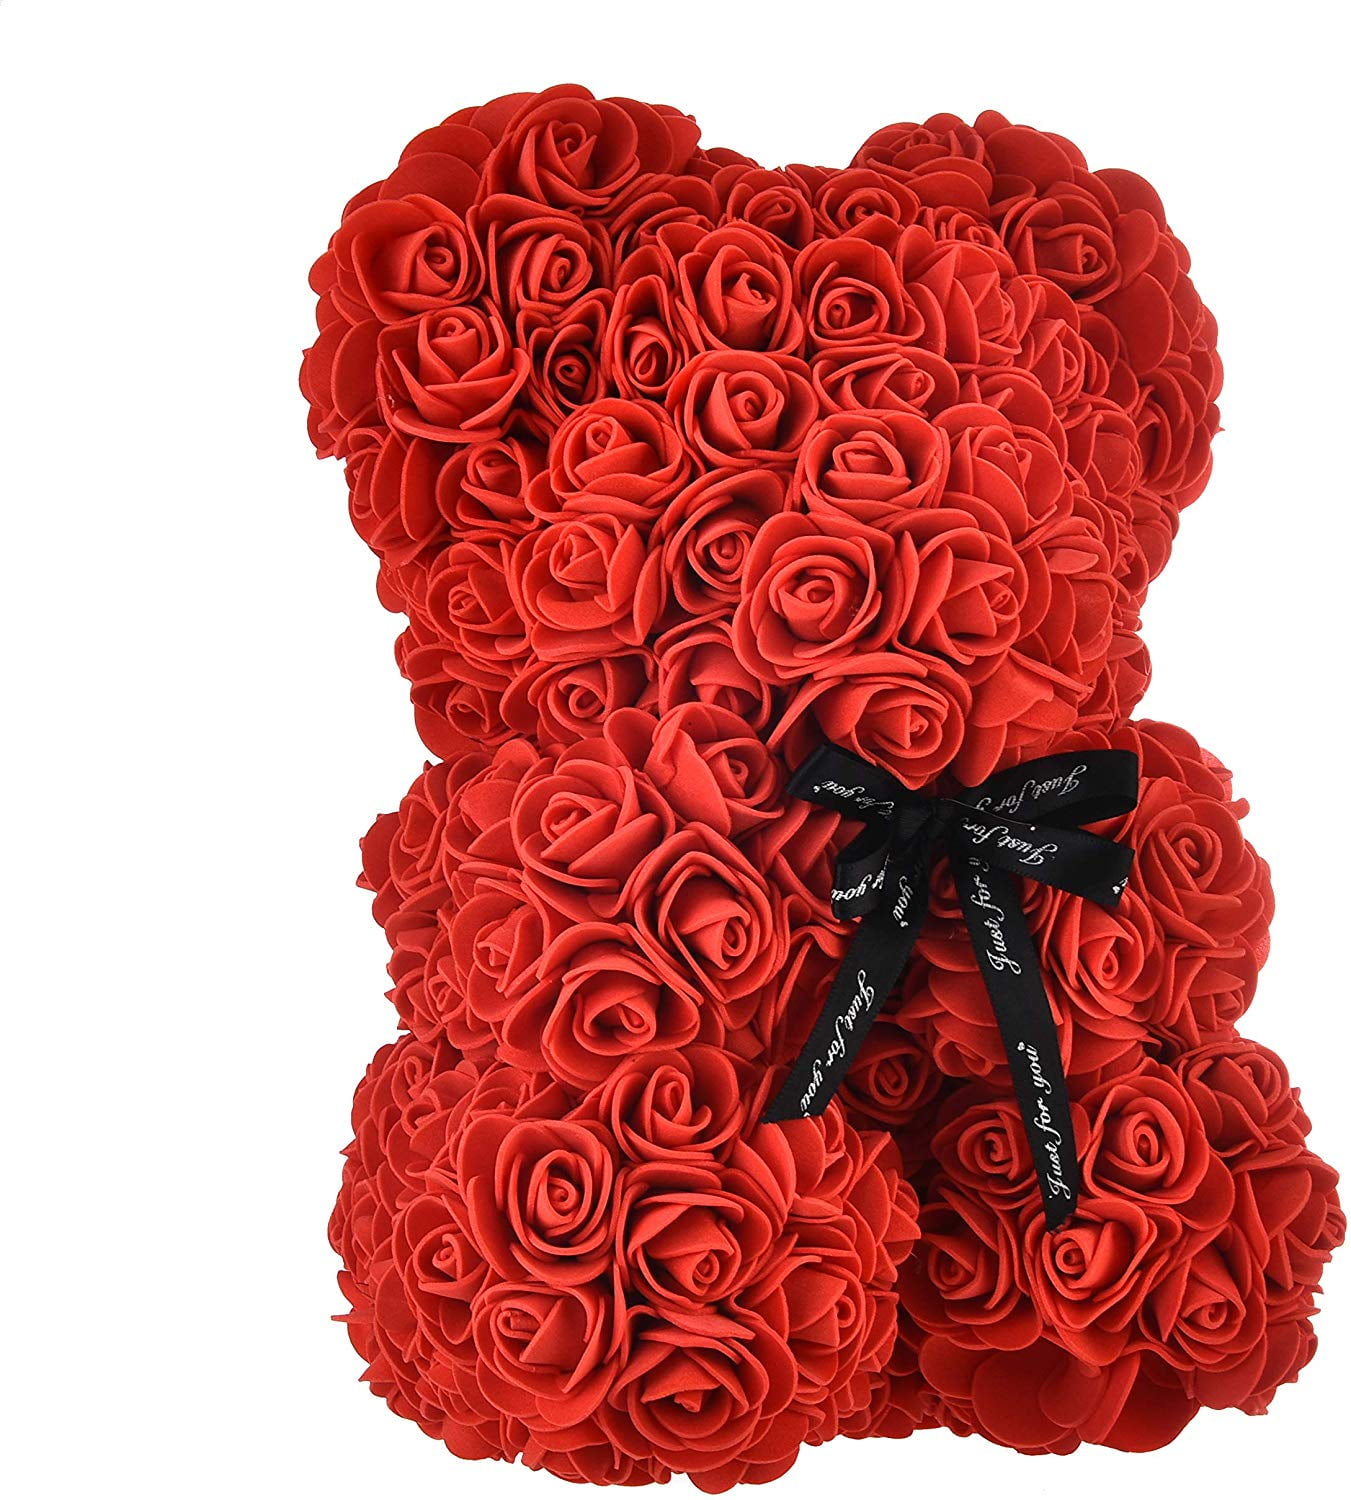 Rose Teddy Bear Handmade Roses Heart Teddy Cute Valentine Gift Party Decoration 